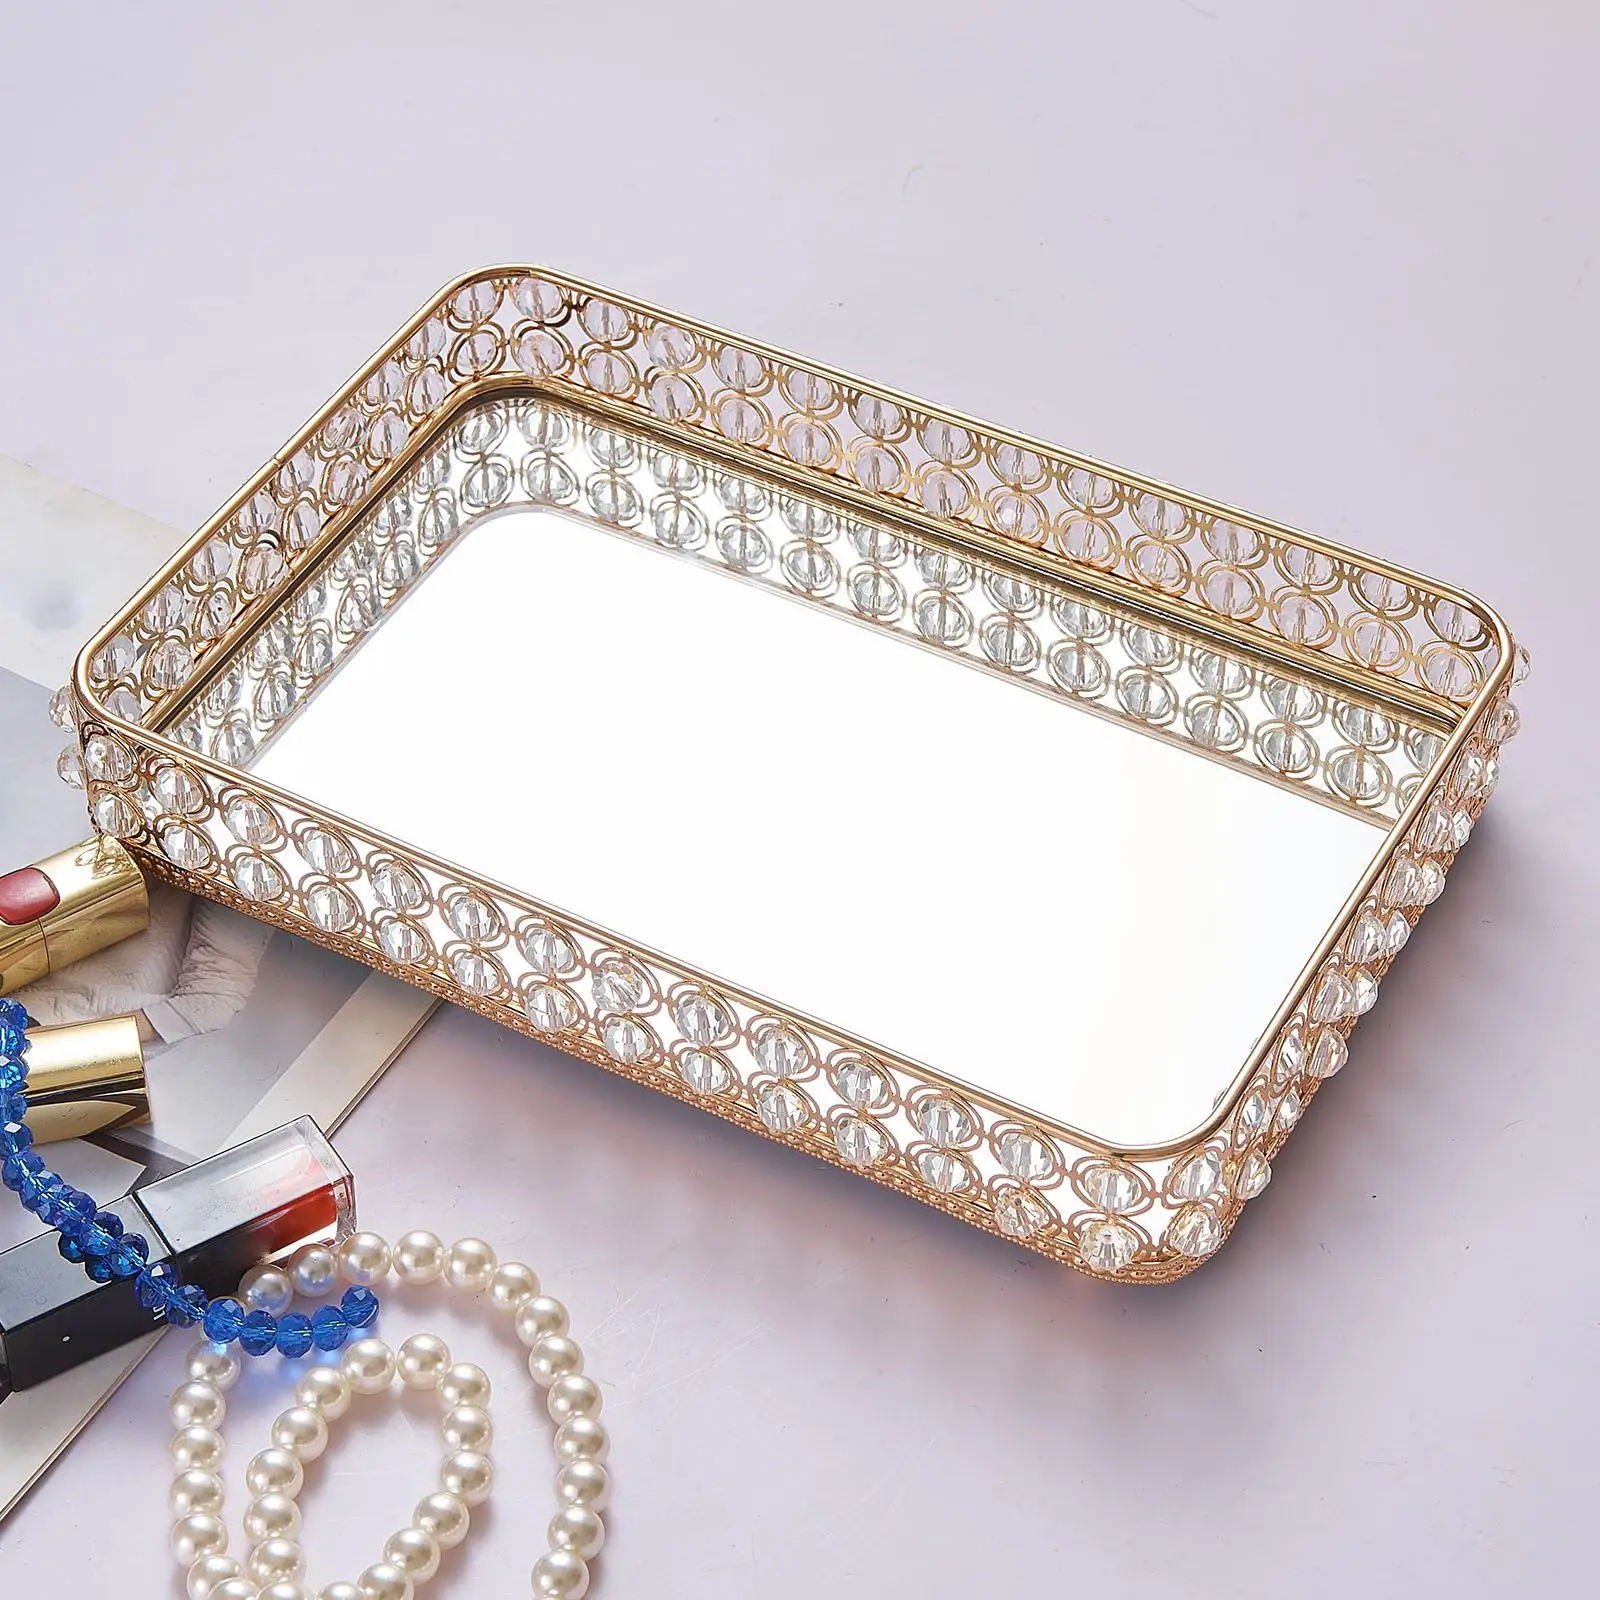 Rectangular Crystal Vanity Tray Bathroom Tray Mirrored Jewelry Trinket Organizer